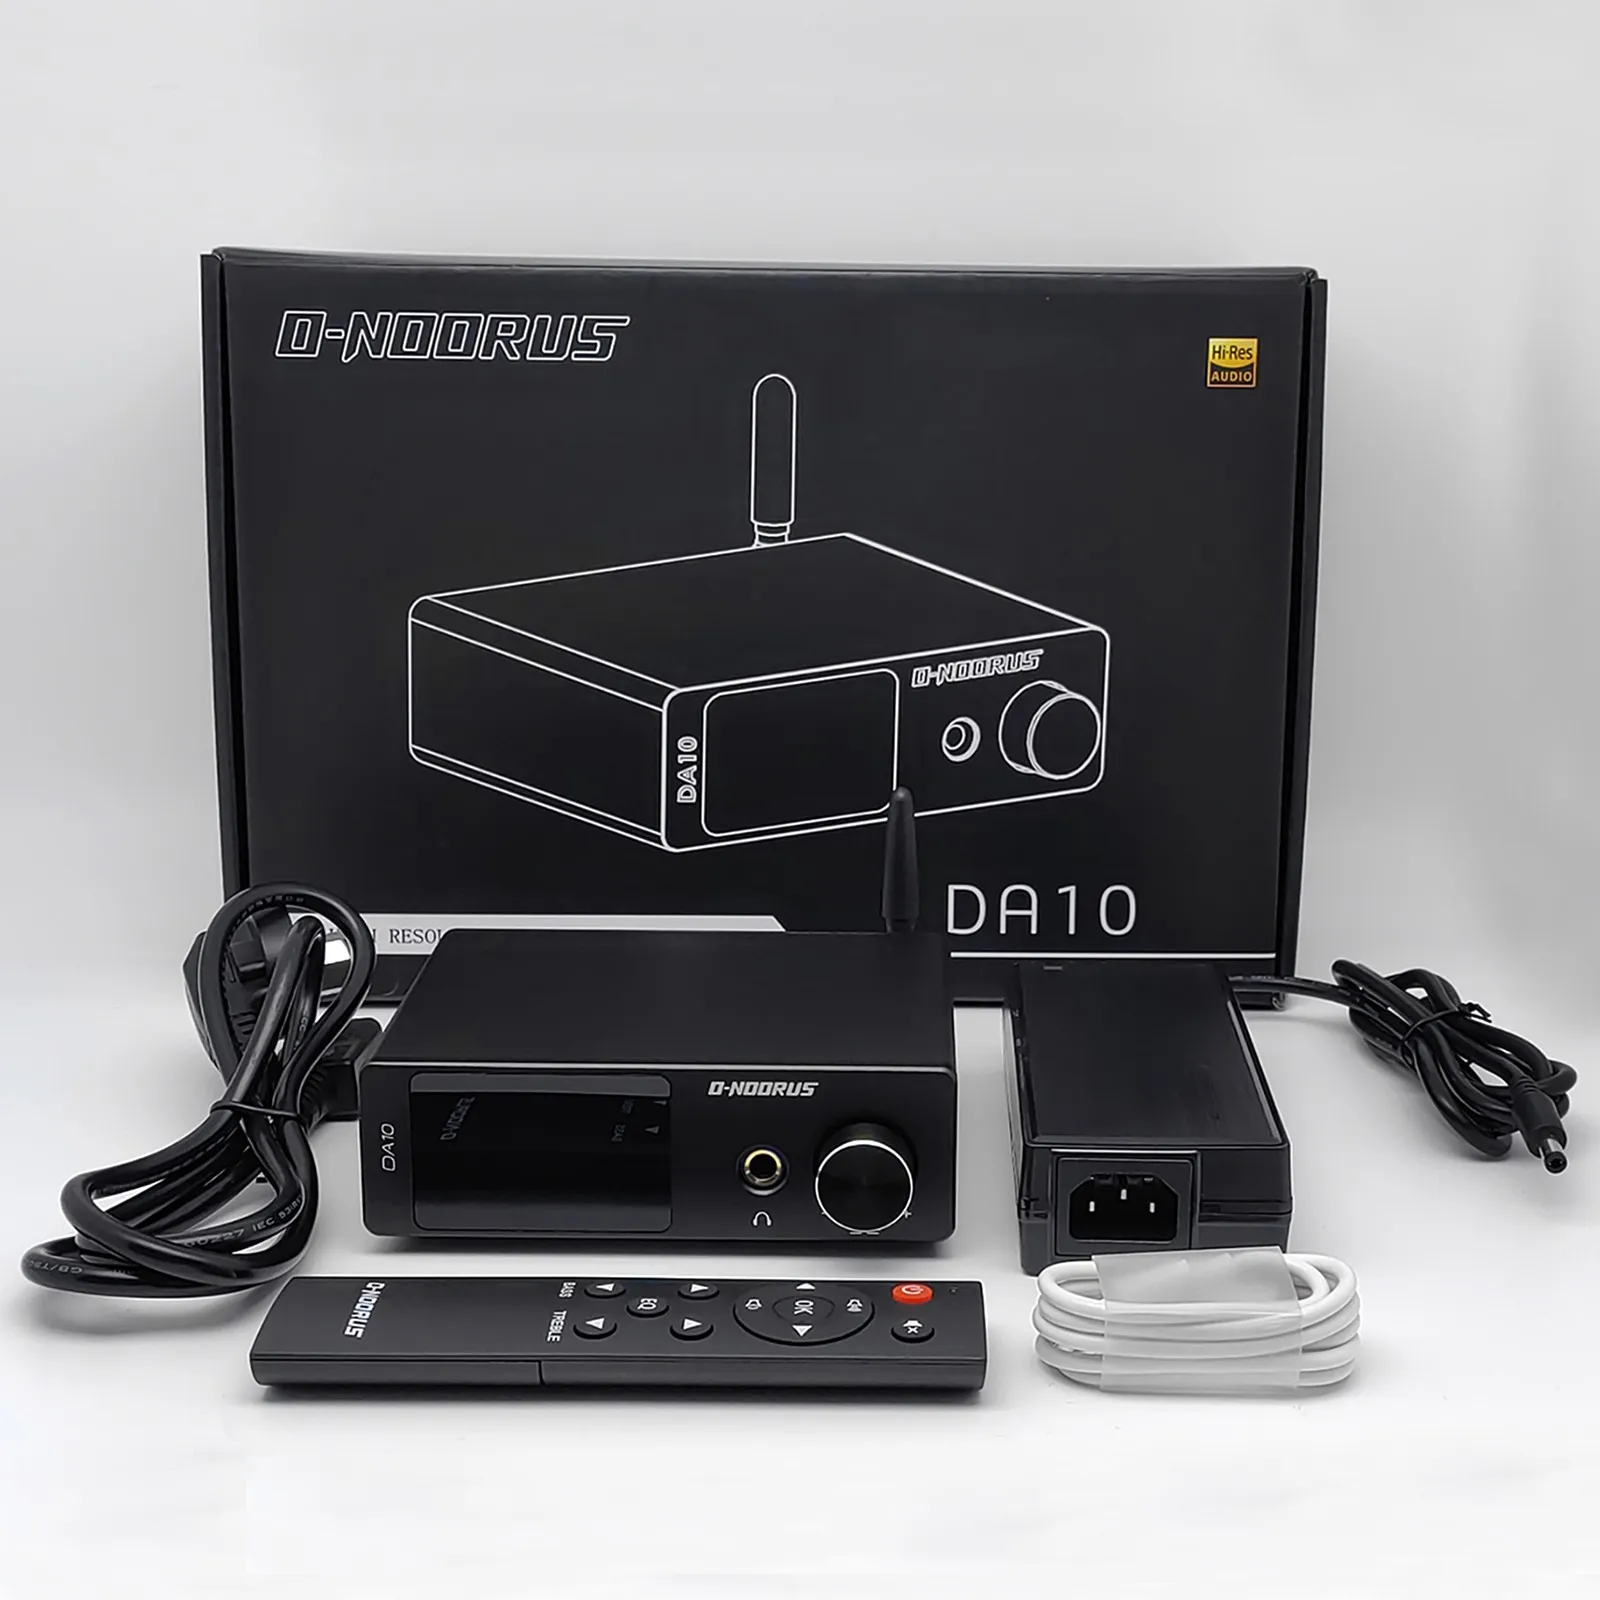 O-NOORUS DA10 HIFI Audio Sound Stereo Subwoofer Bluetooth Apt X USB DAC Amp Player DSP Full Digital Power Home Theater Amplifier images - 6